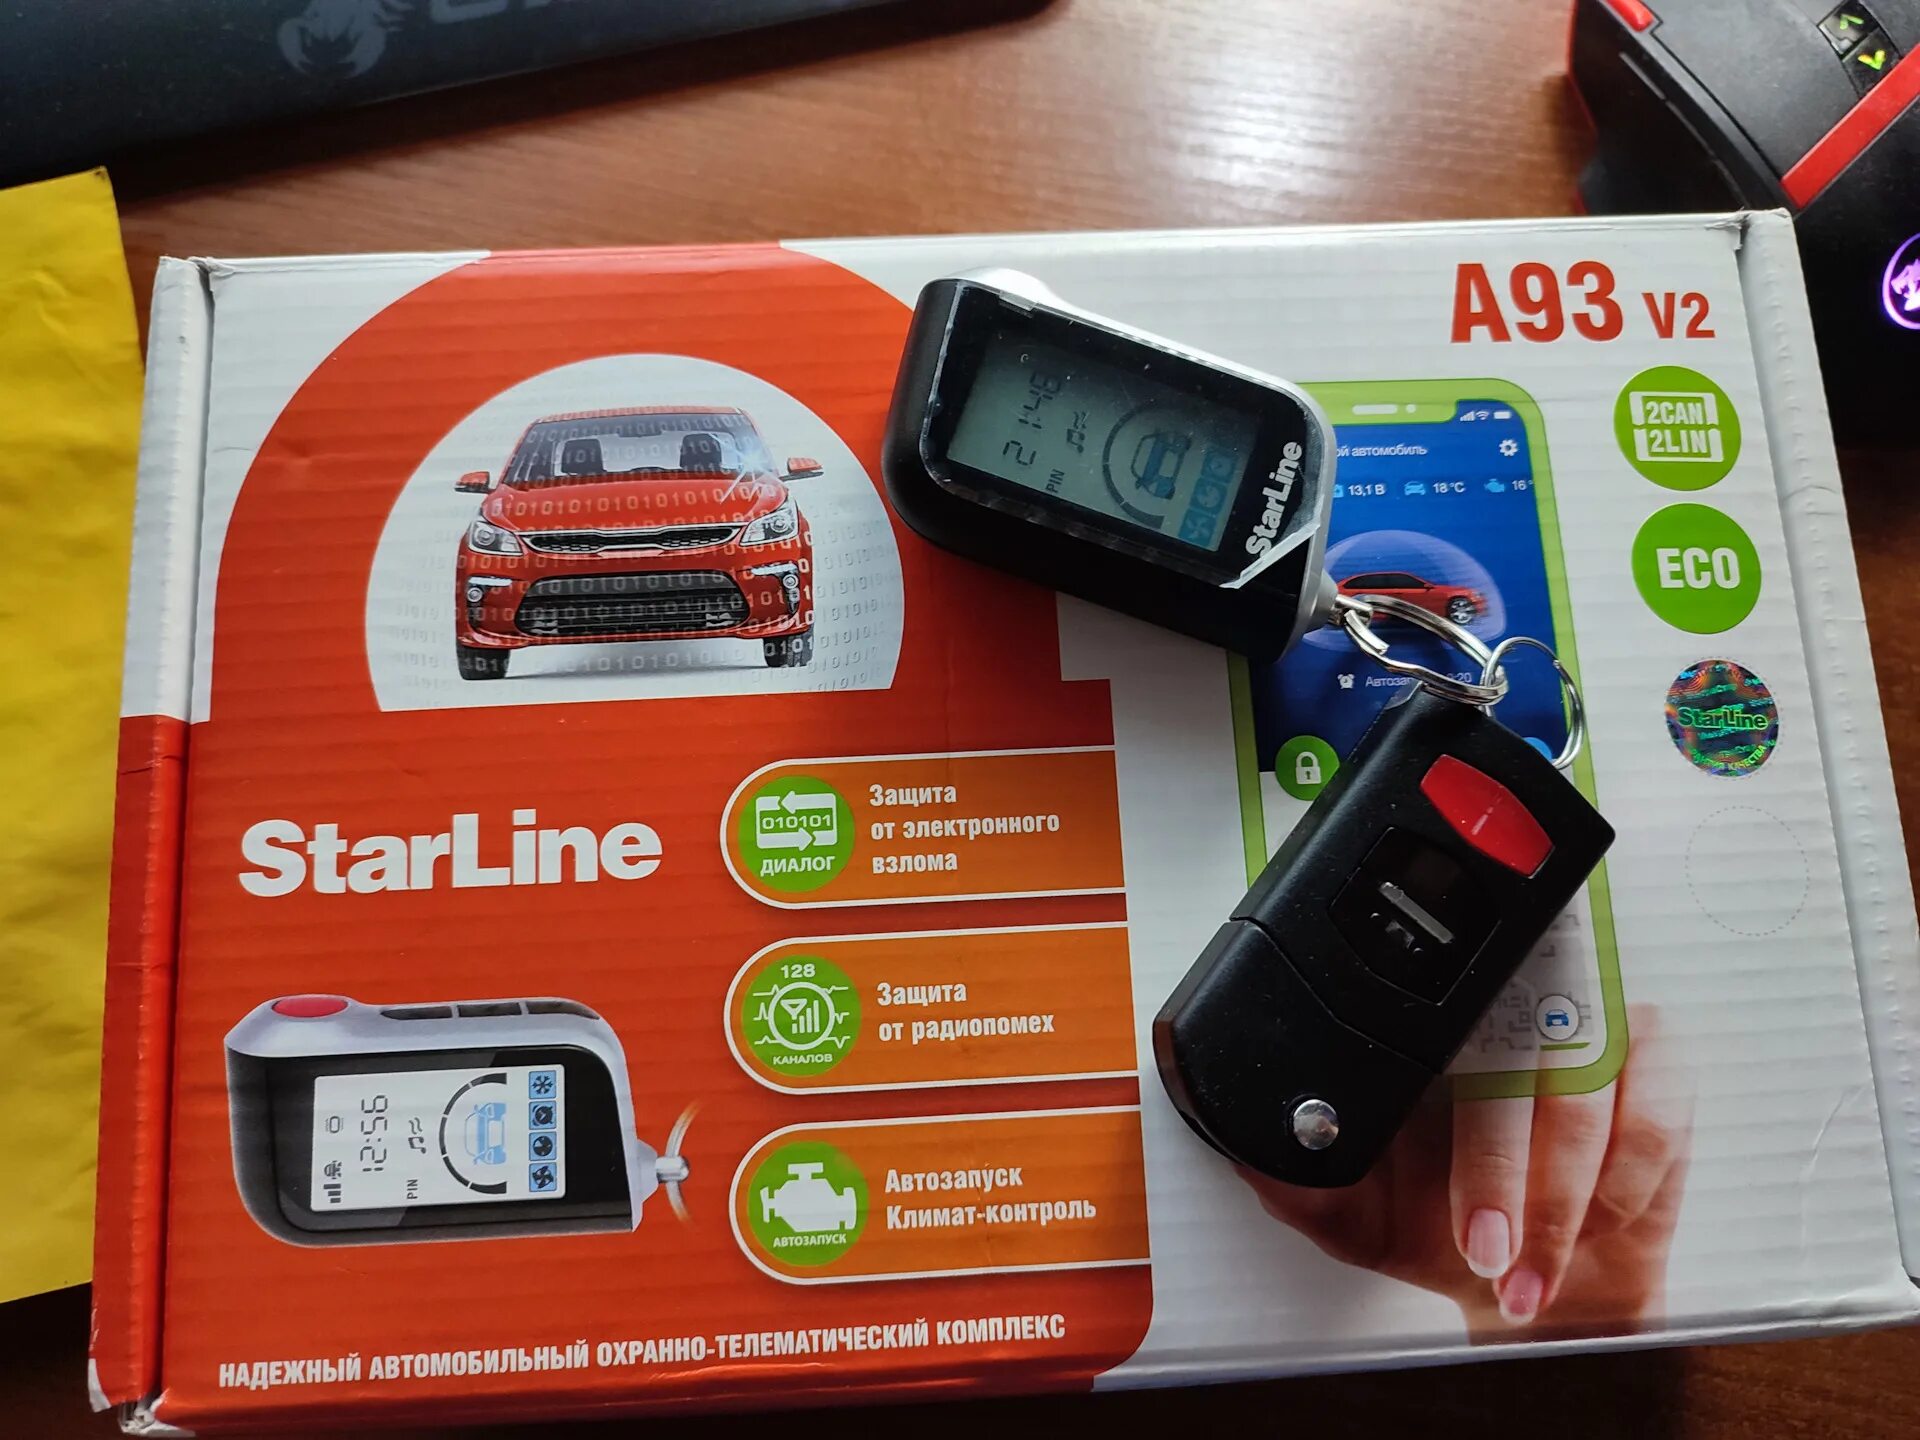 Starline a93 2can eco. Сигнализация с автозапуском STARLINE a93. Автосигнализация STARLINE a93 v2 2can+2lin GSM Eco. STARLINE a93 Eco. Комплектация сигнализации старлайн а93 с автозапуском.